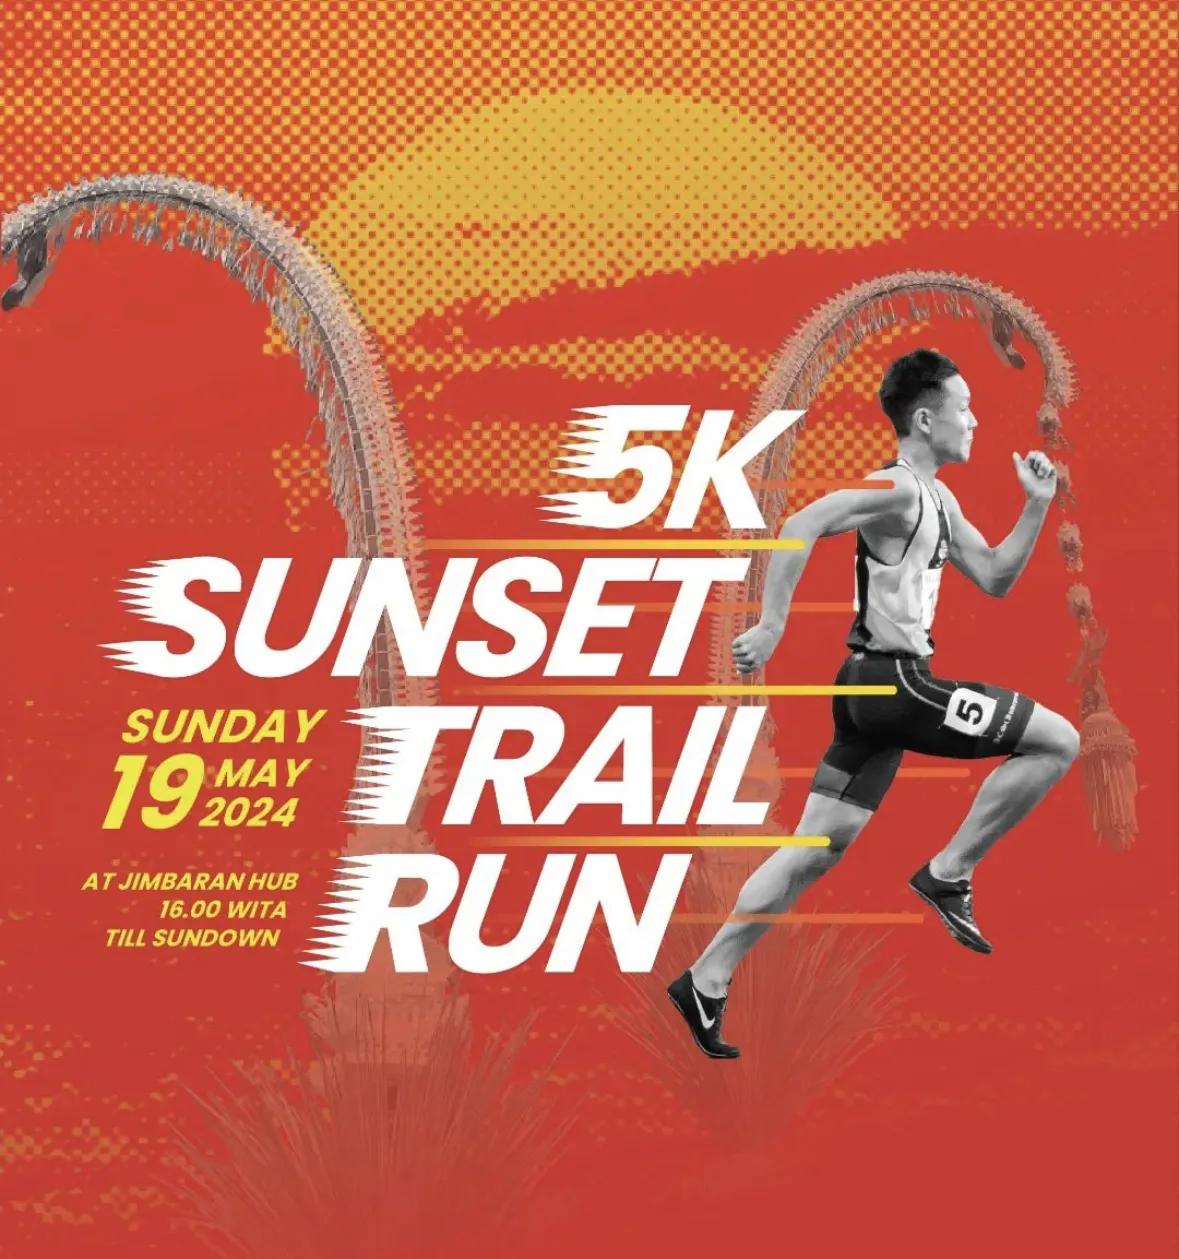 Event at Jimbaran Hub on May 19 2024: 5k Sunset Trail Run